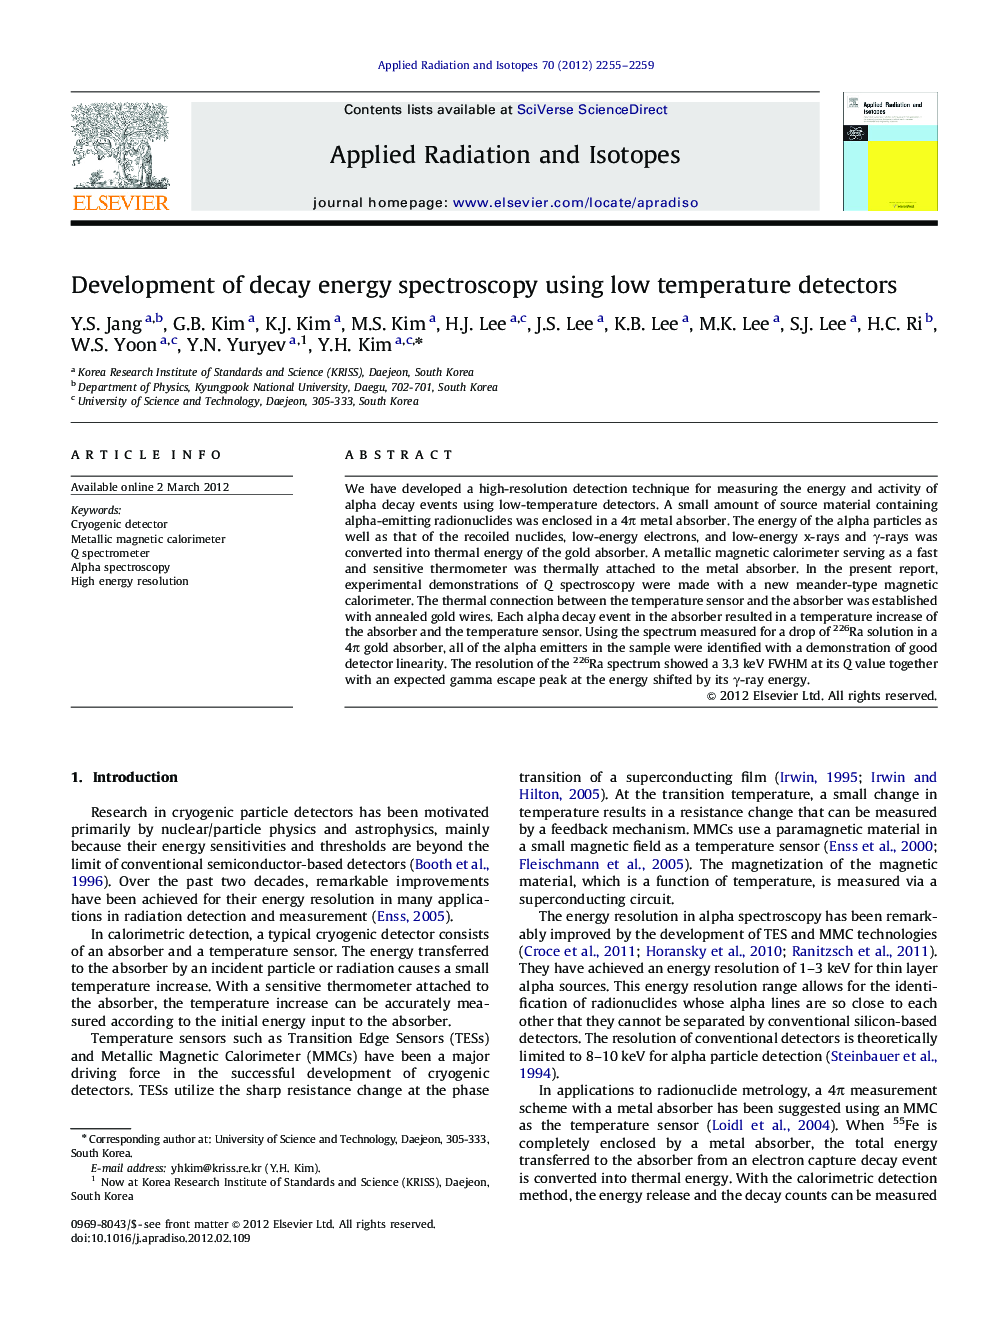 Development of decay energy spectroscopy using low temperature detectors